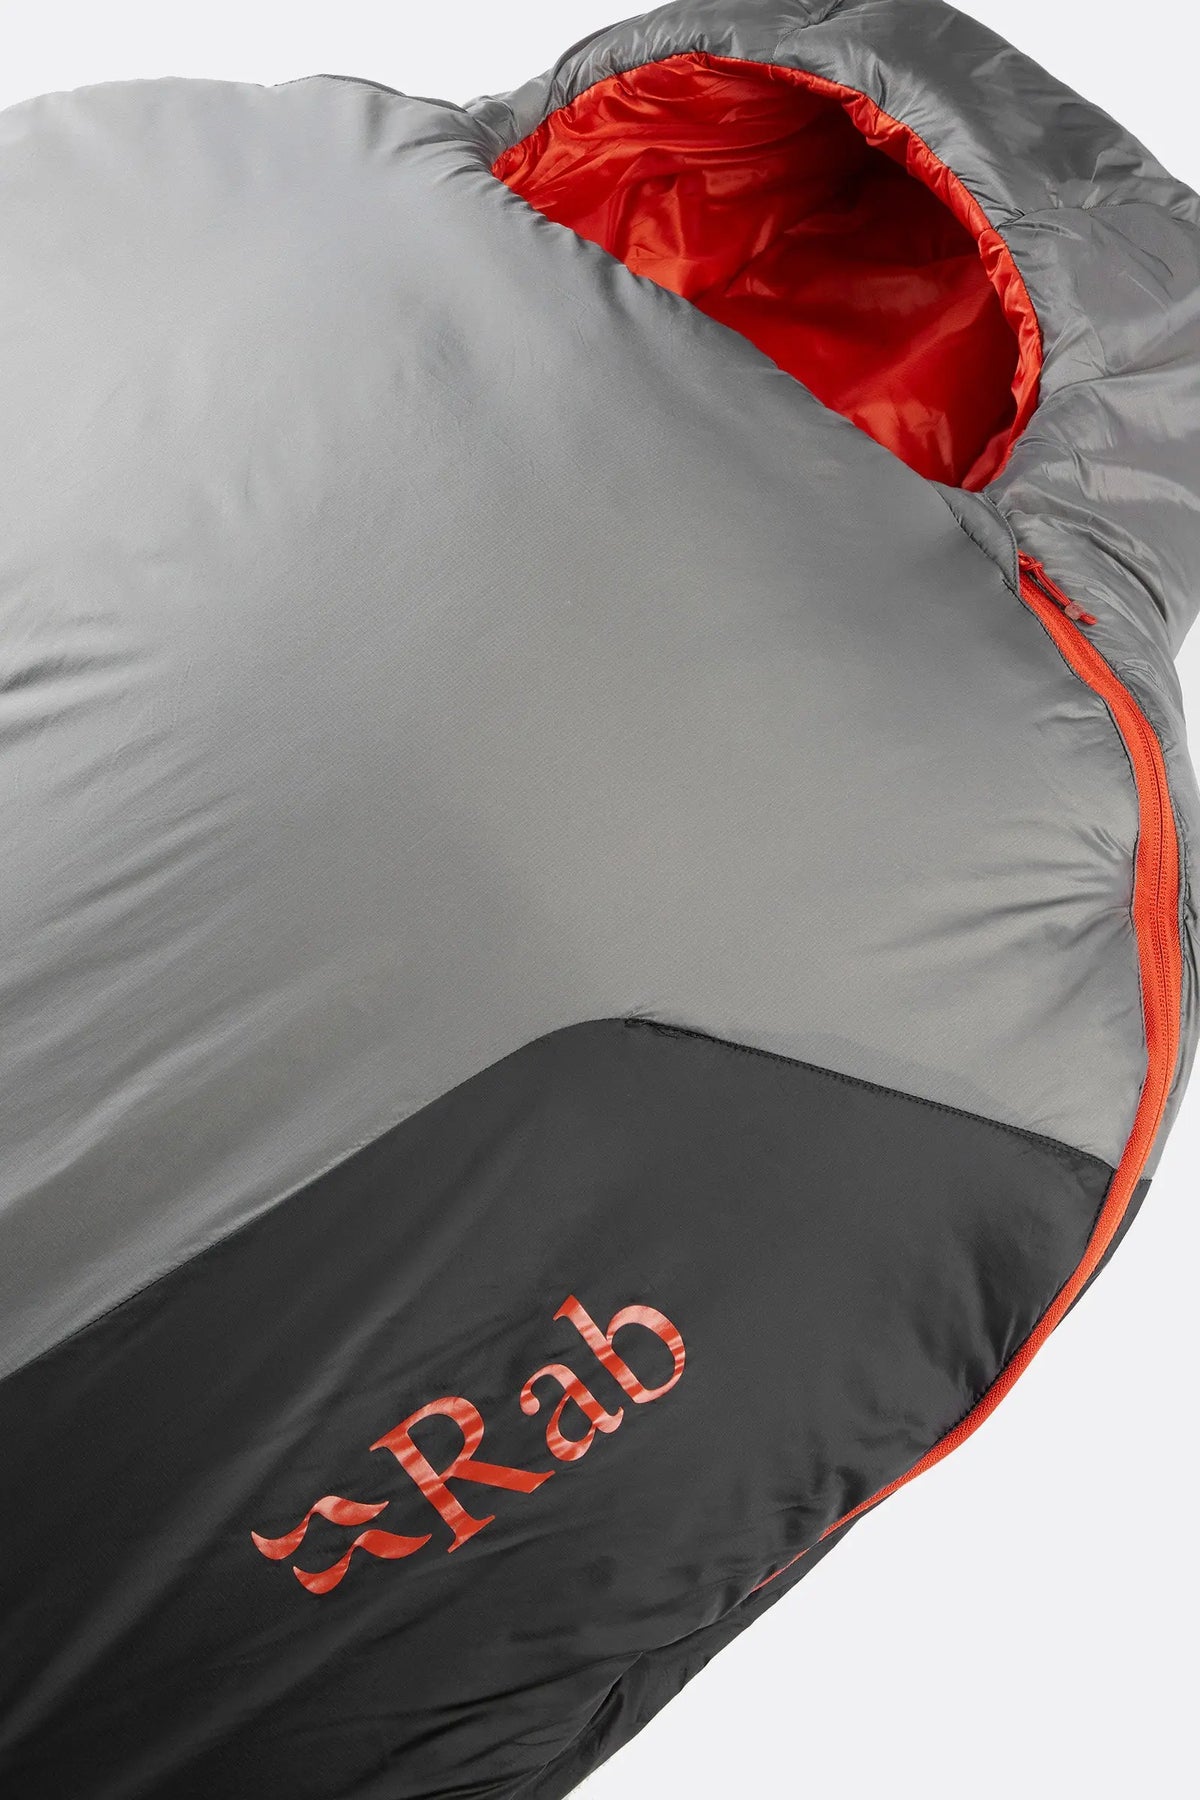 Rab Solar Ultra 1 Sleeping Bag (-4C)